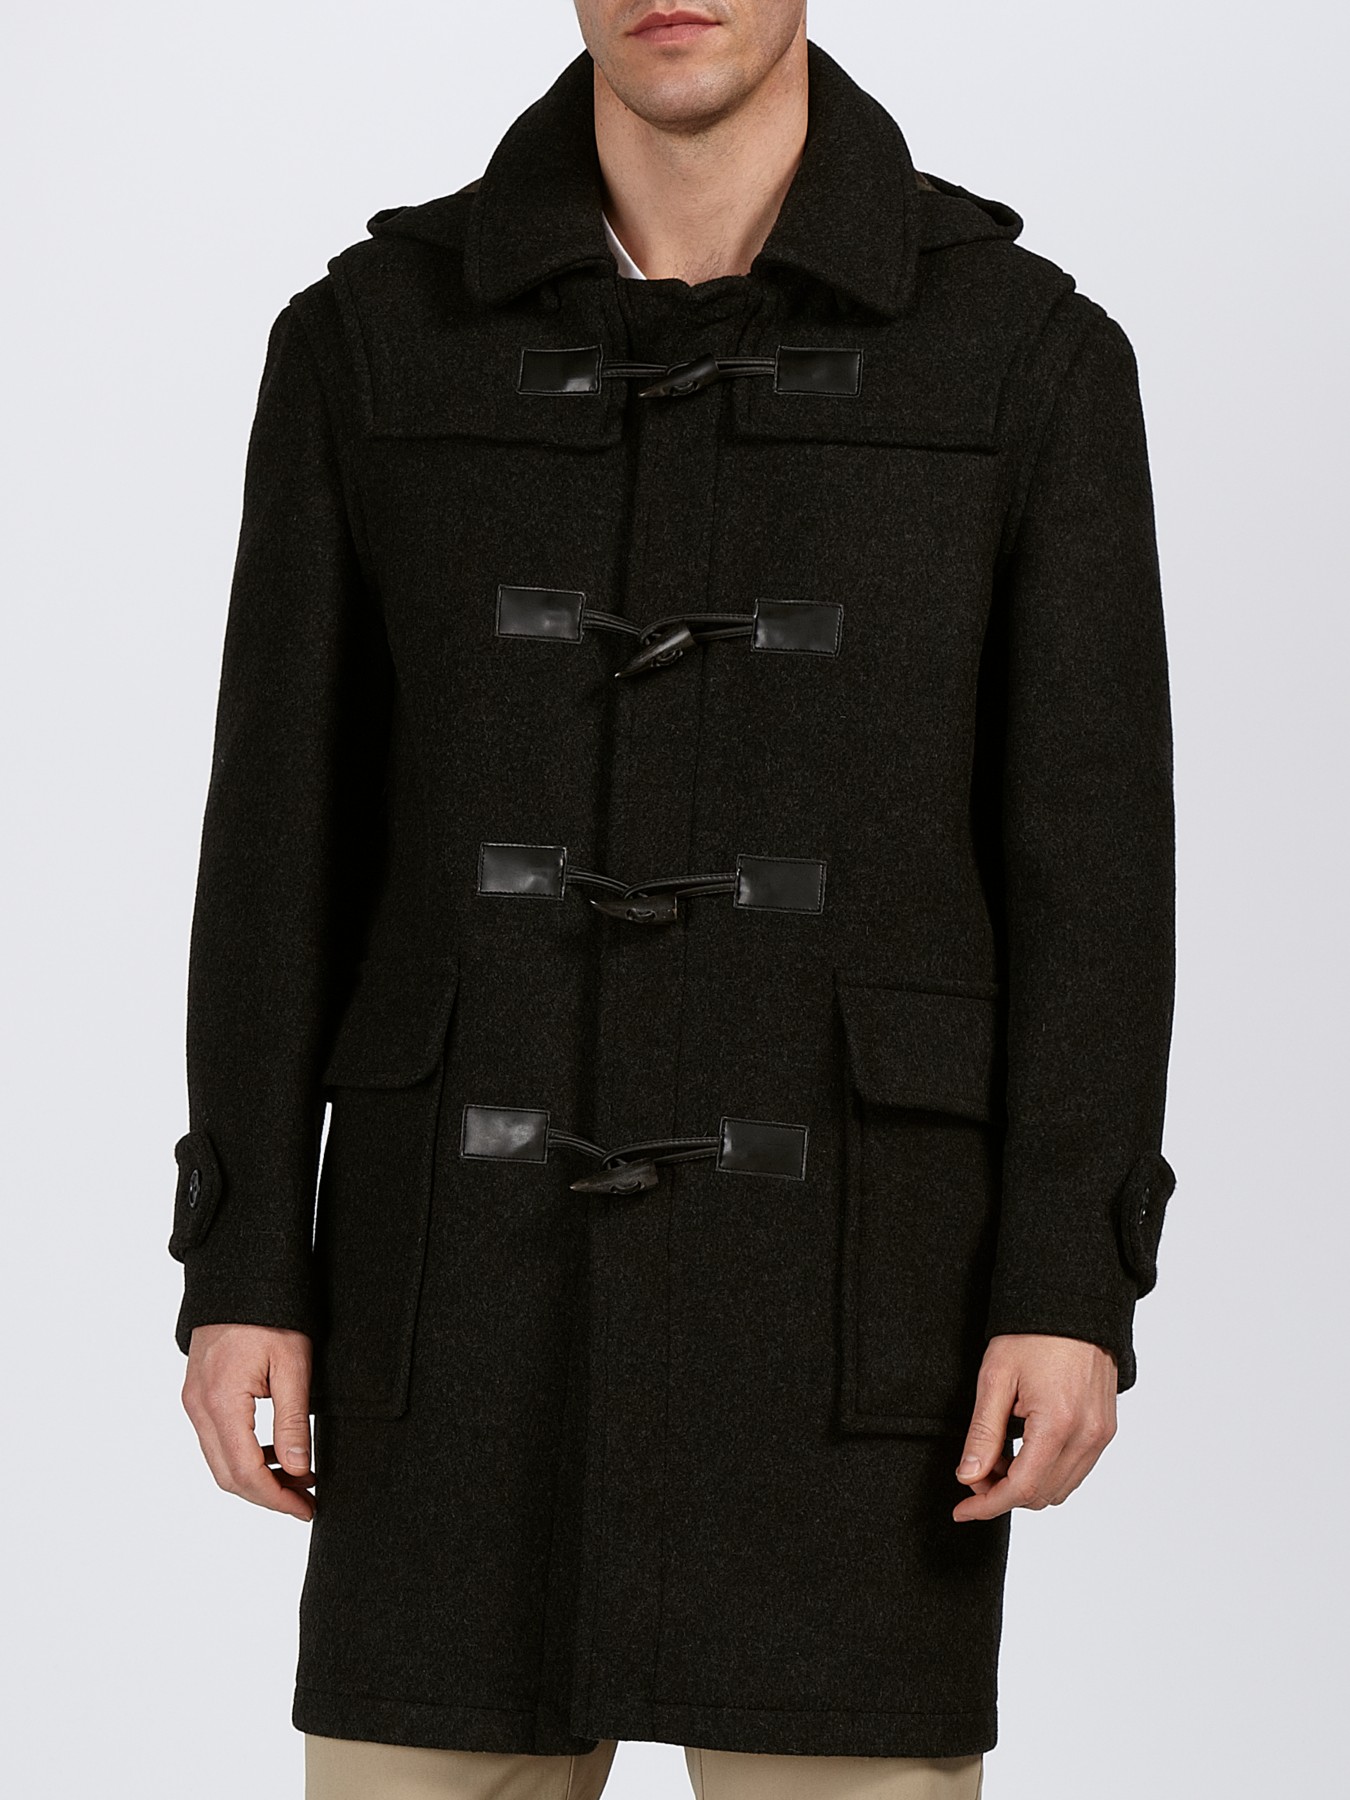 Barbour Classic Wool Duffel Coat in Anthracite (Black) for Men - Lyst